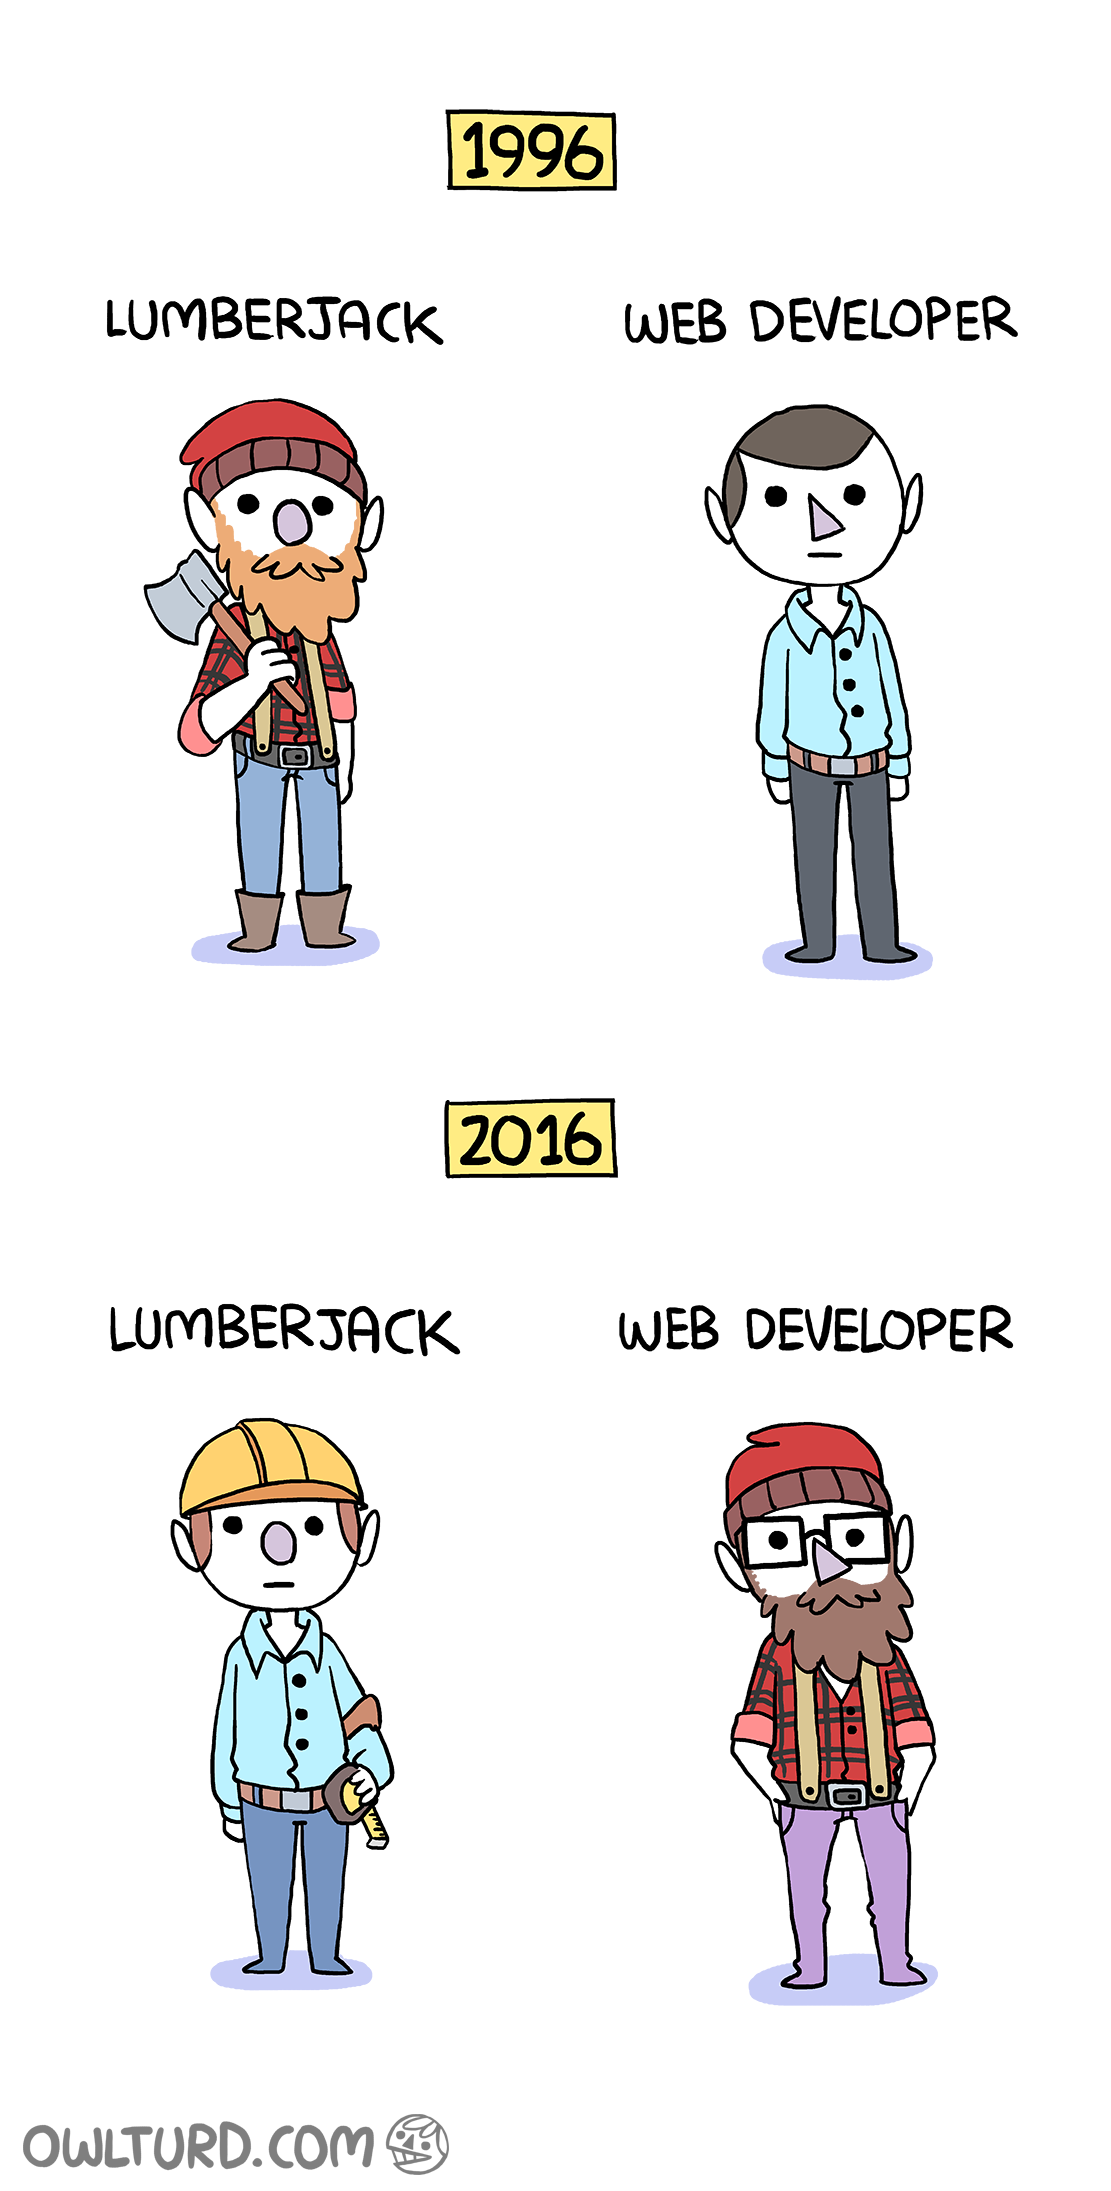 lumberjack_vs_web_developer.png